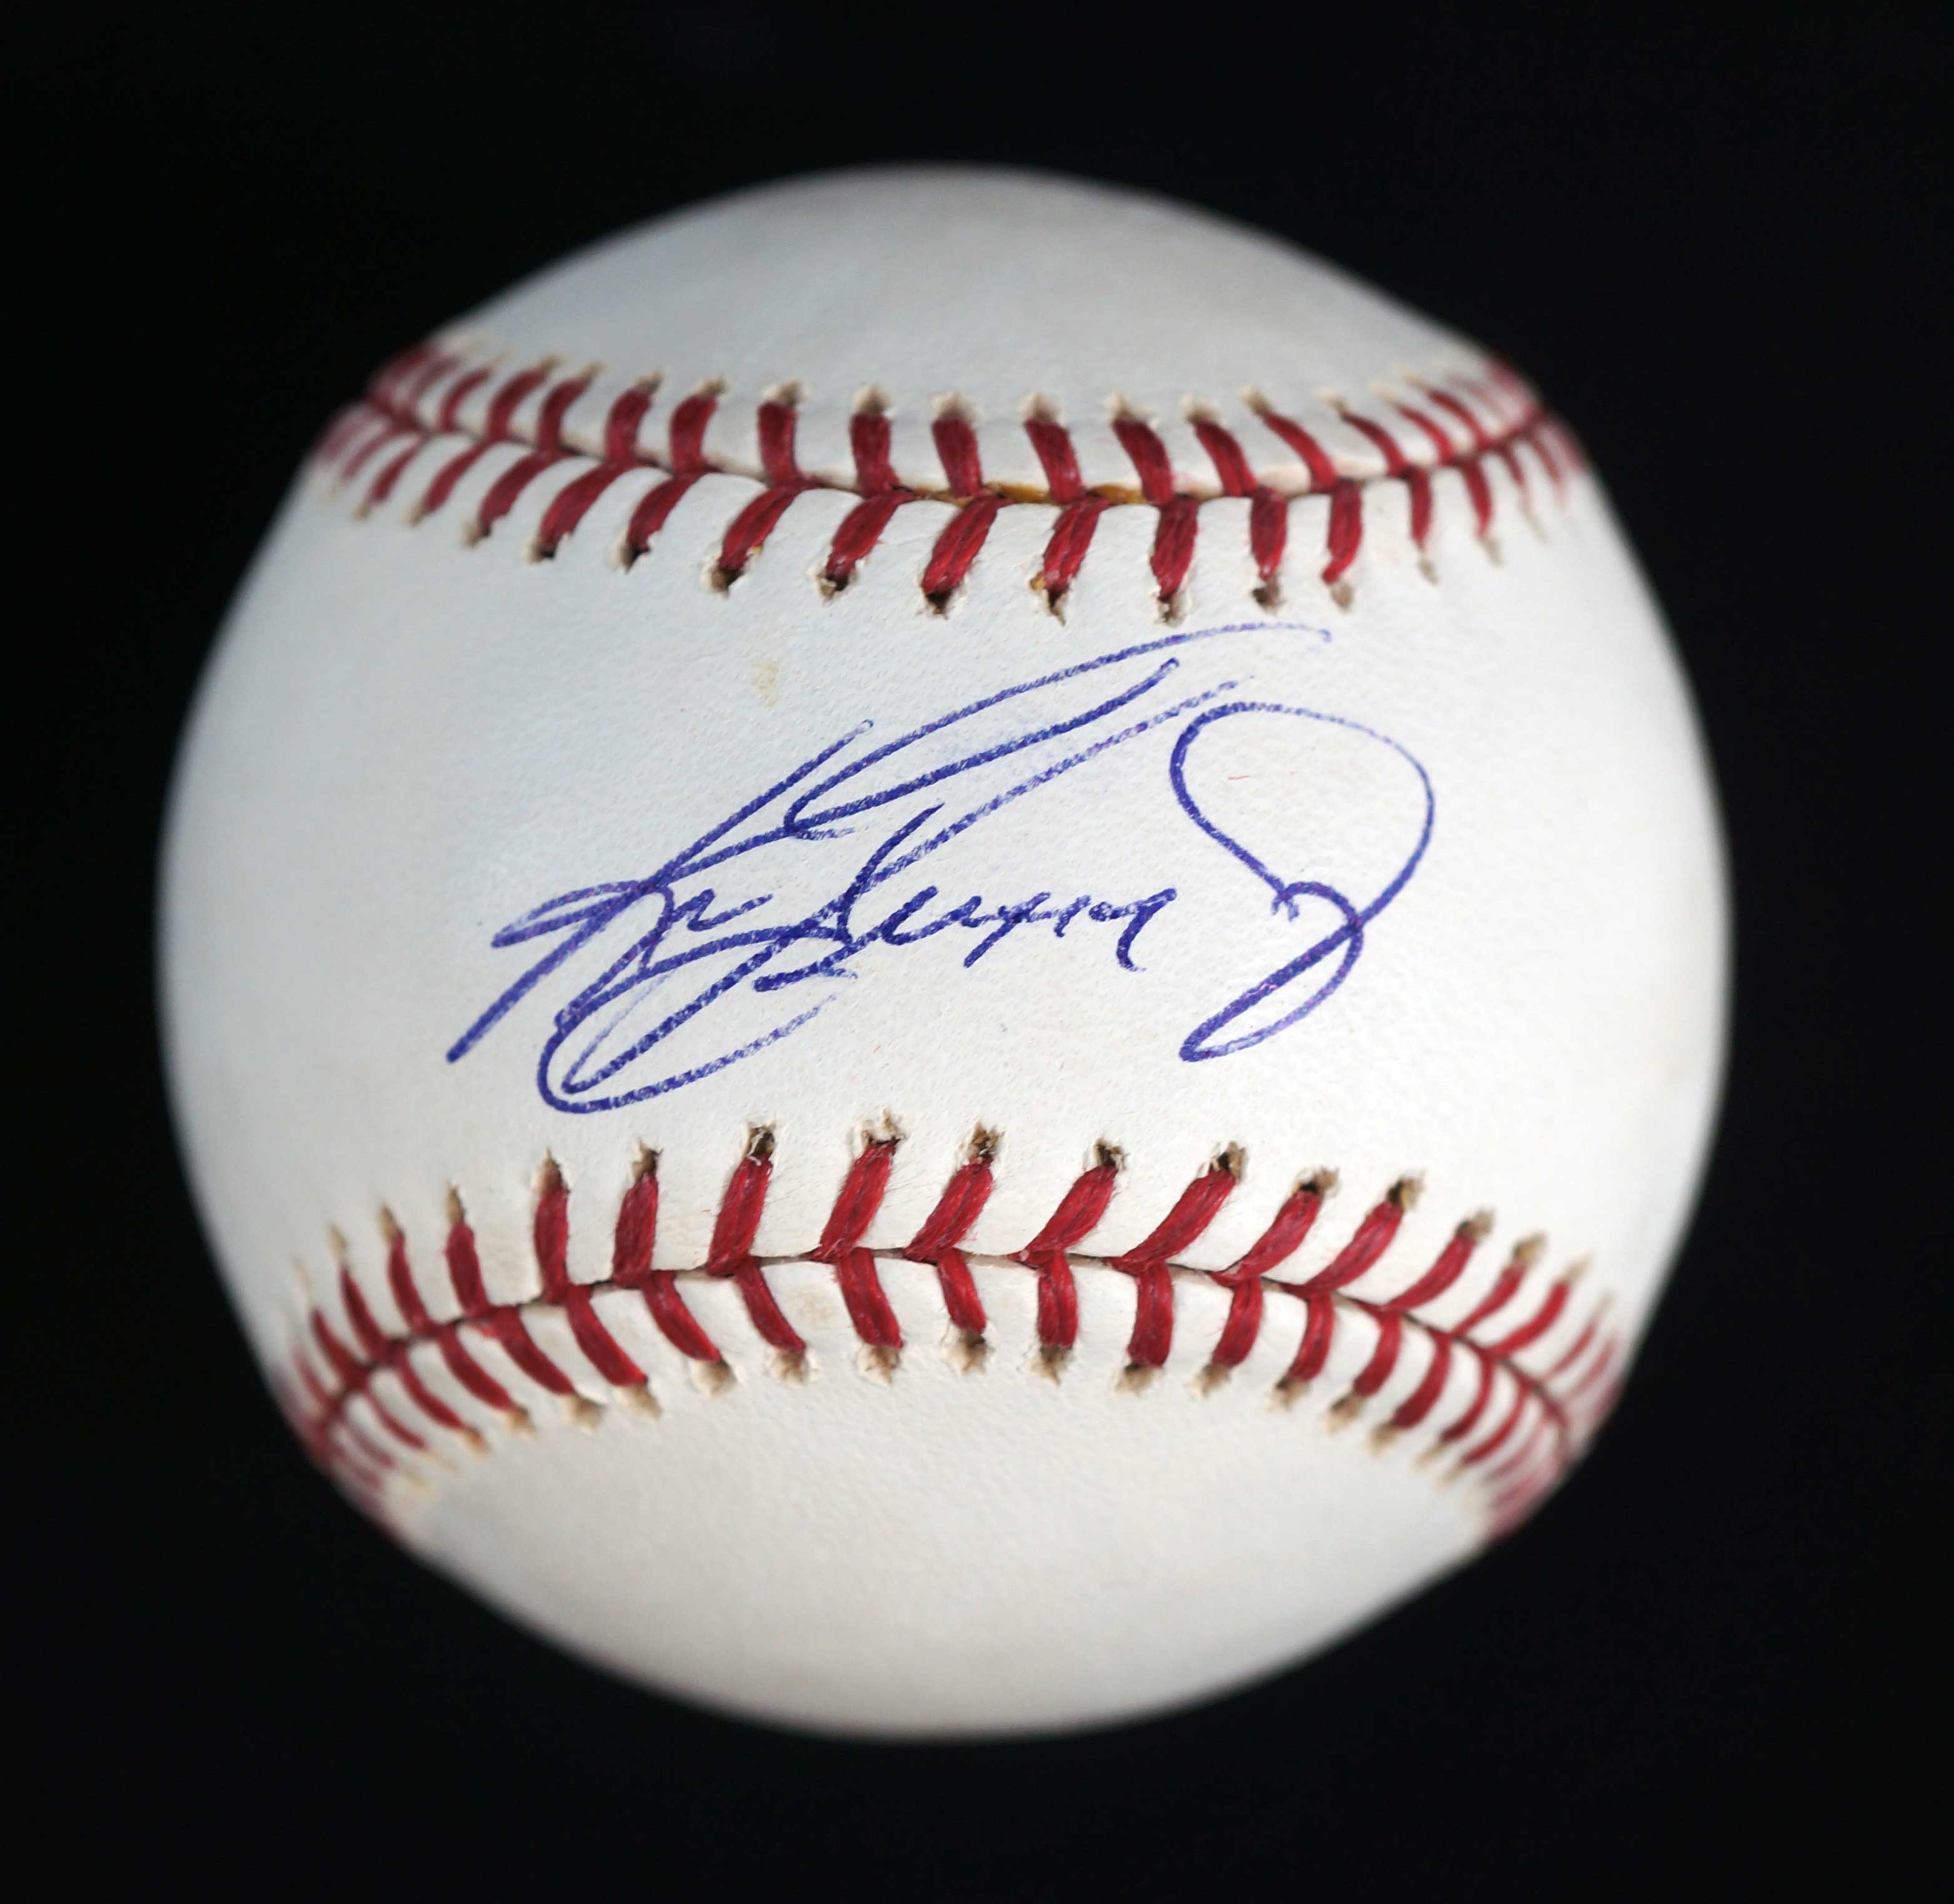 Lot 227 Ken Griffey Jr Single Signed Baseball